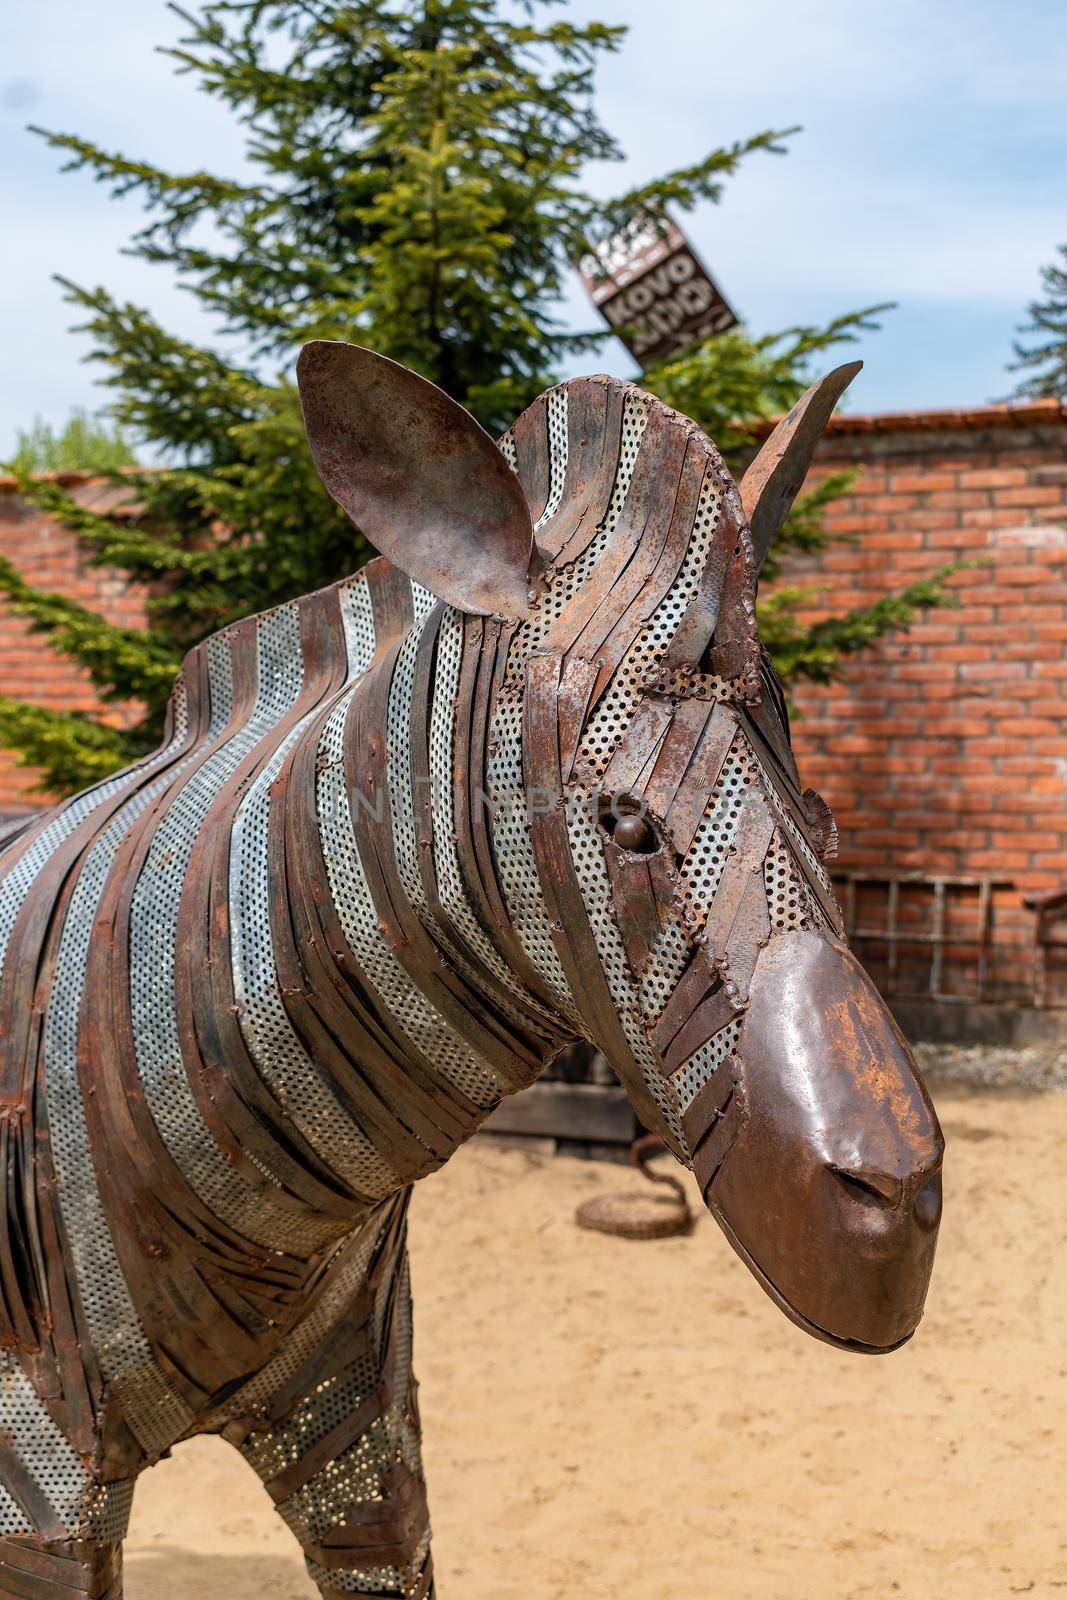 Zebra head, made of scrap metal by rostik924